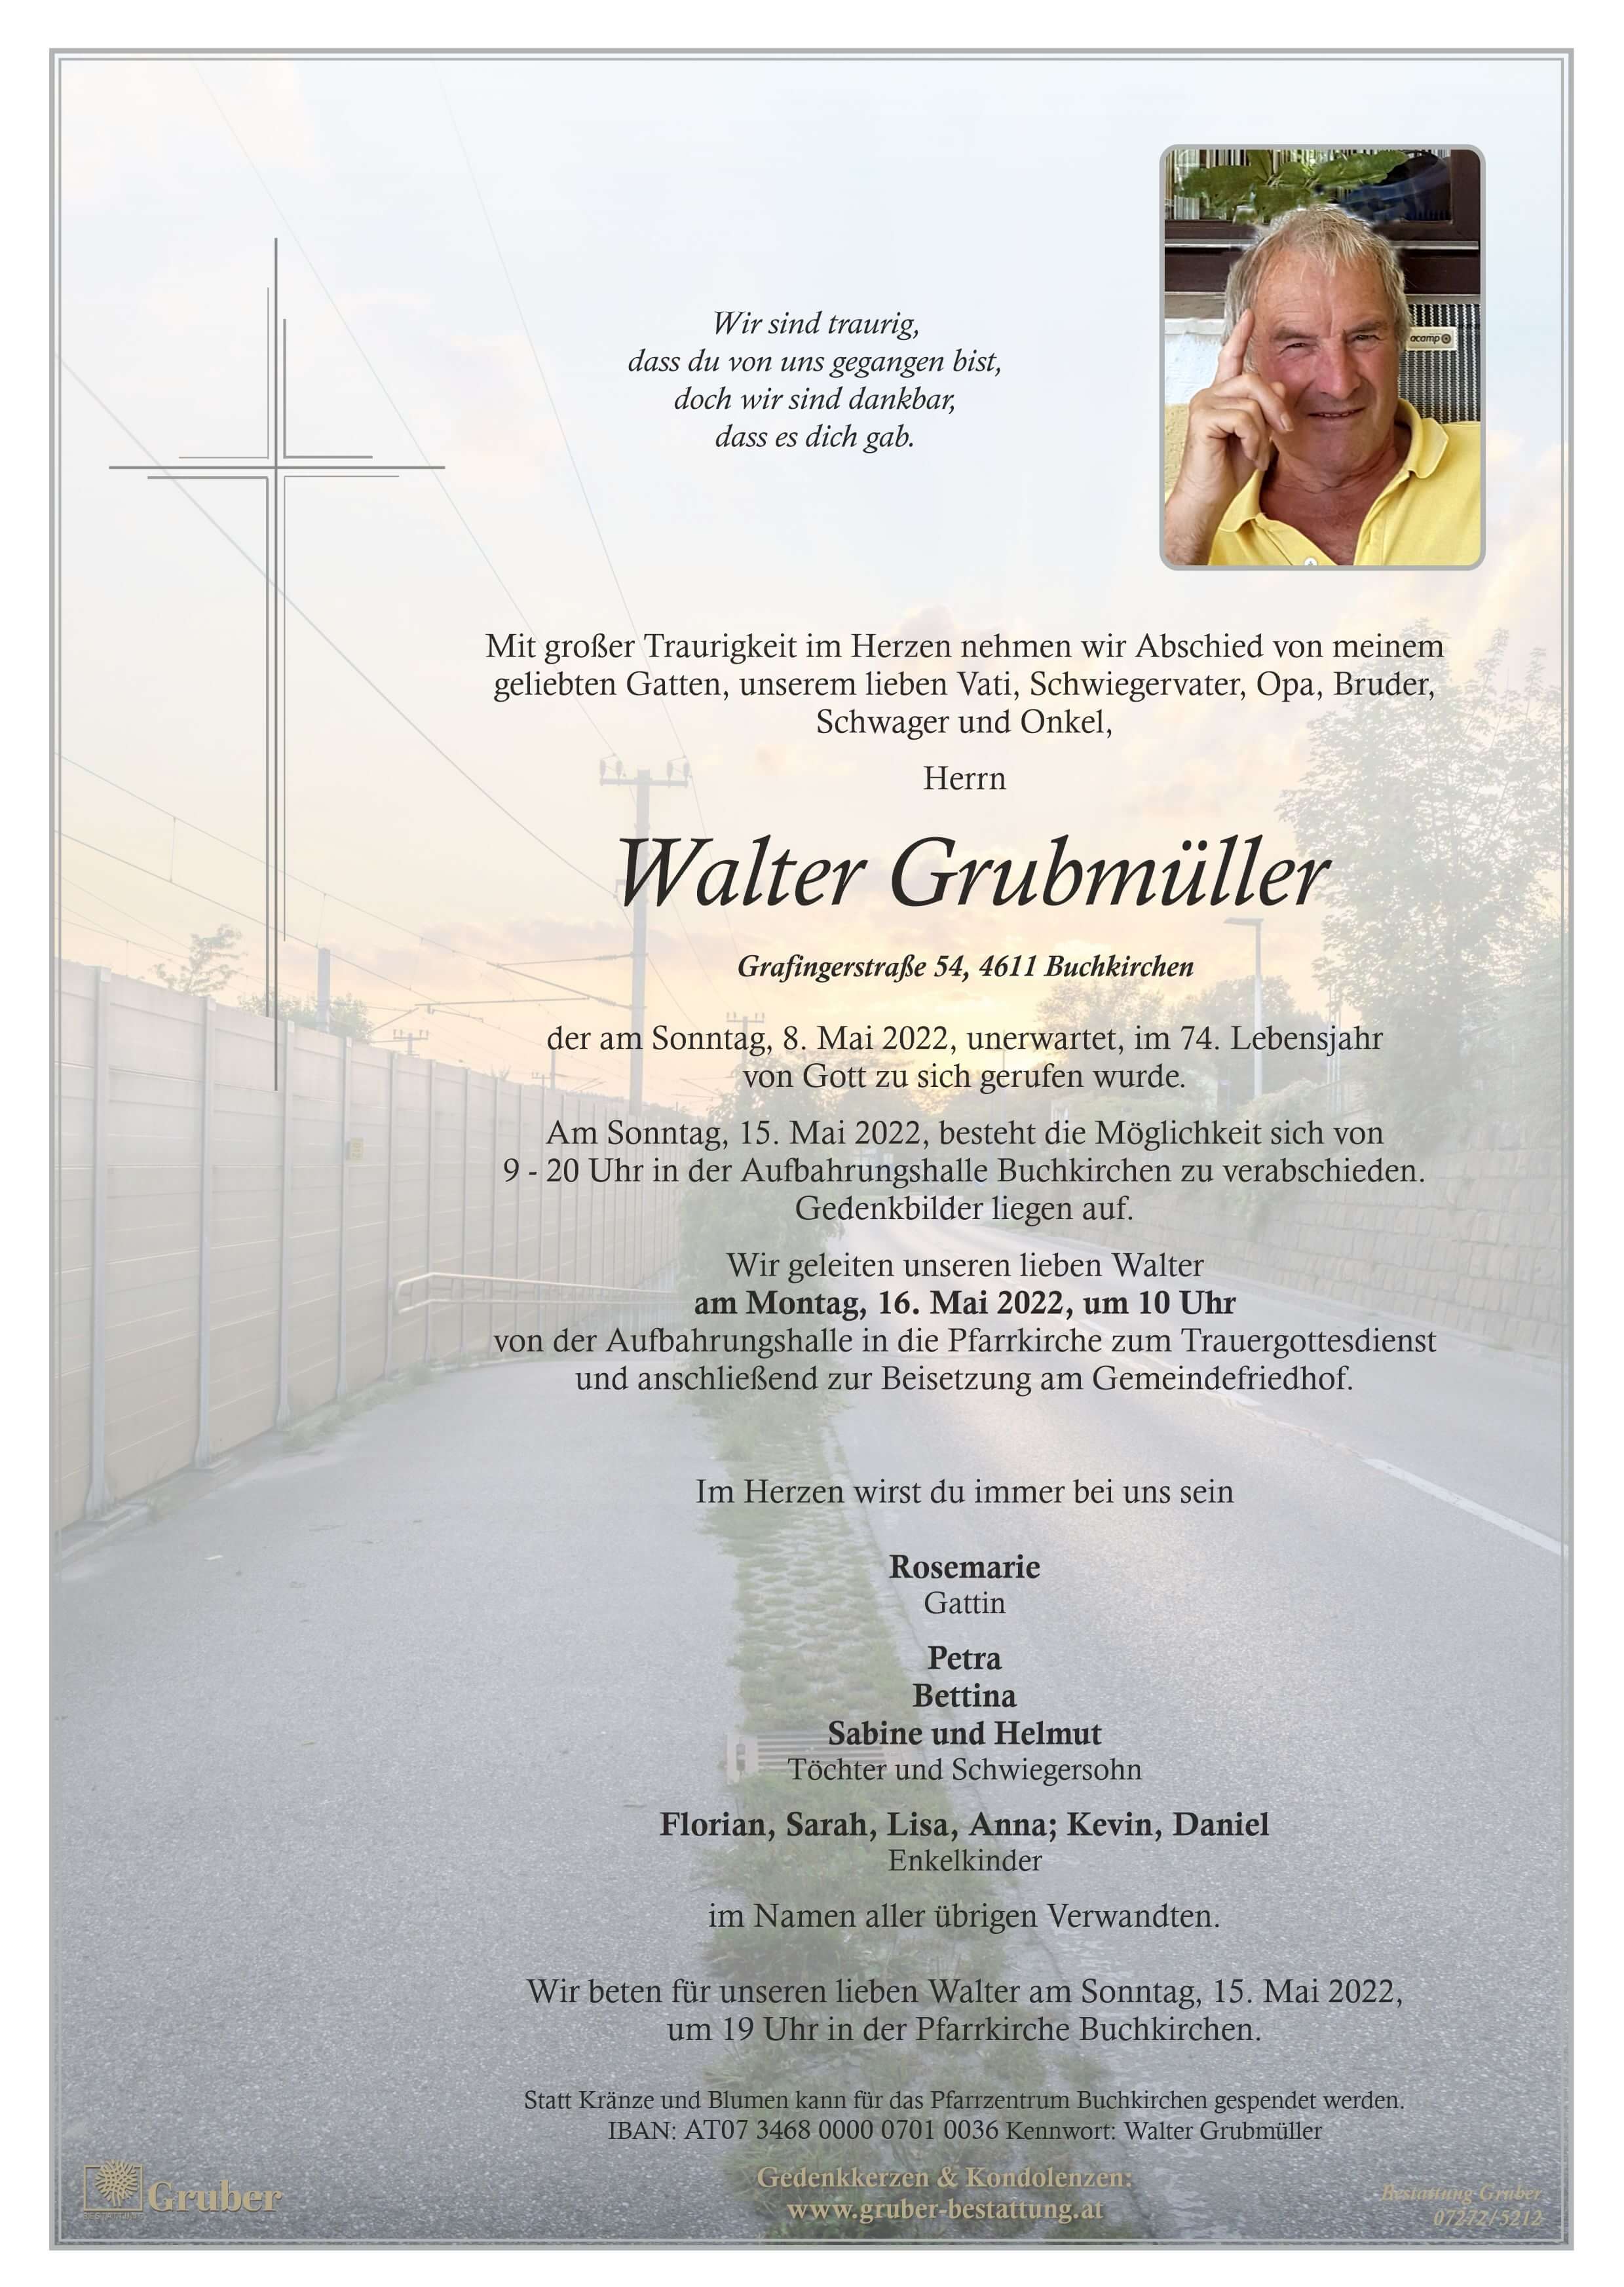 Walter Grubmüller (Buchkirchen)